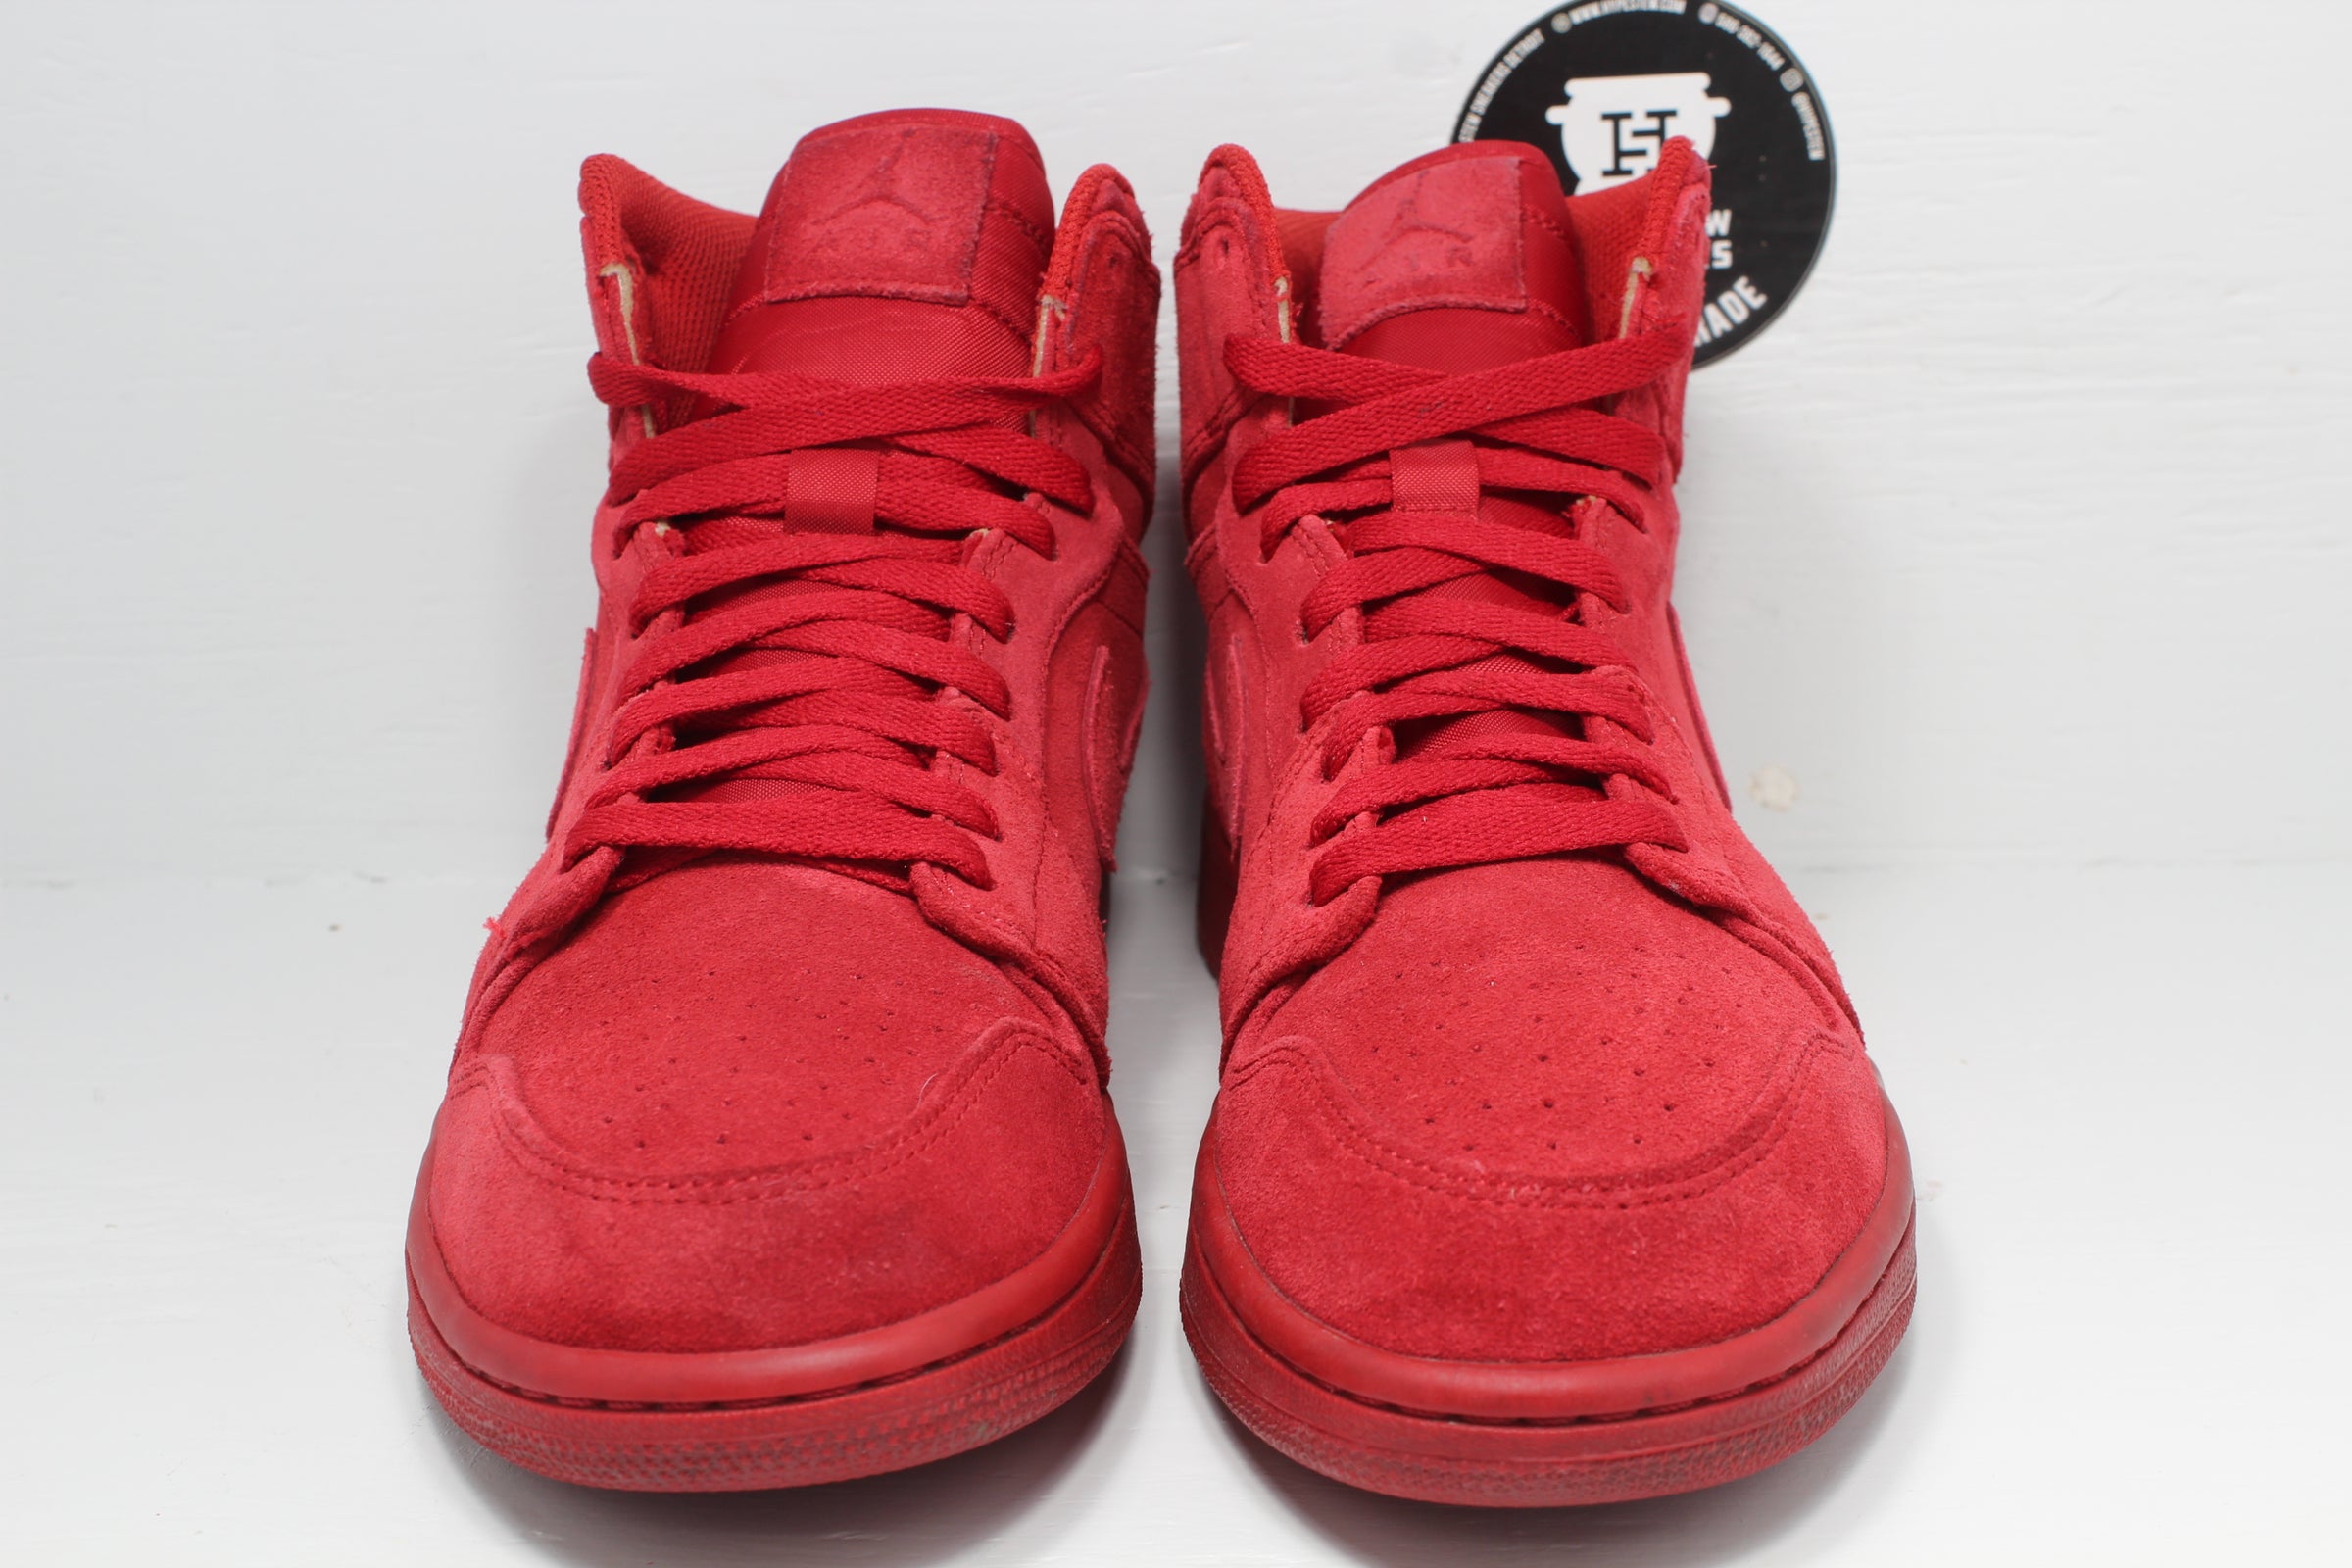 Línea del sitio parcialidad masa Nike Air Jordan 1 High Red Suede | Hype Stew Sneakers Detroit